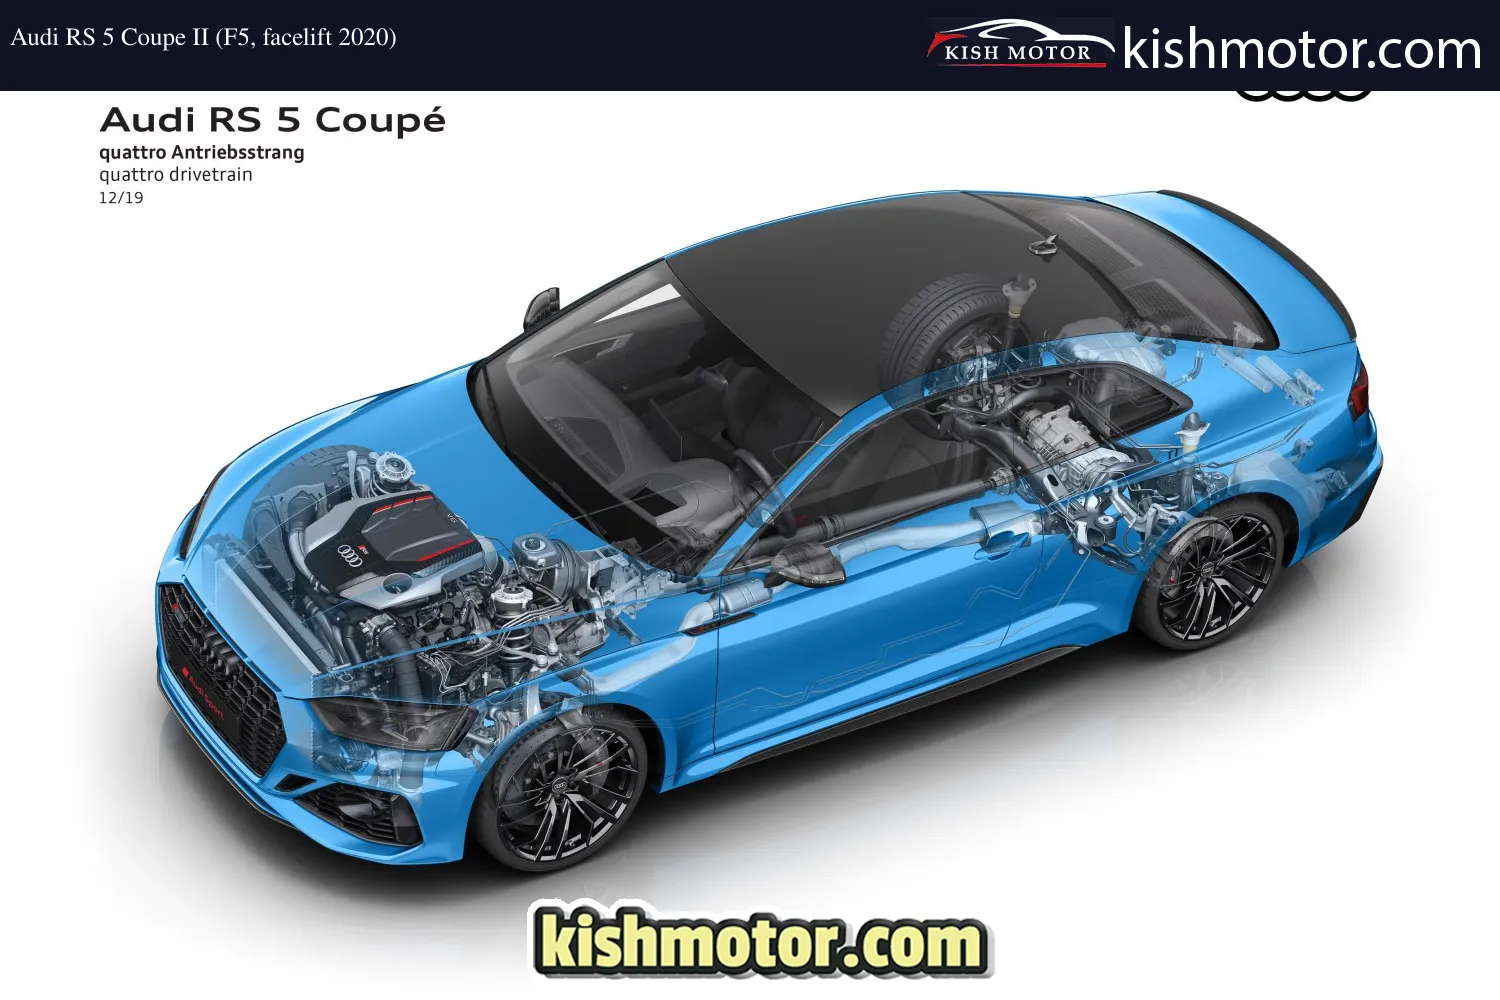 Audi RS 5 Coupe II (F5, facelift 2020)